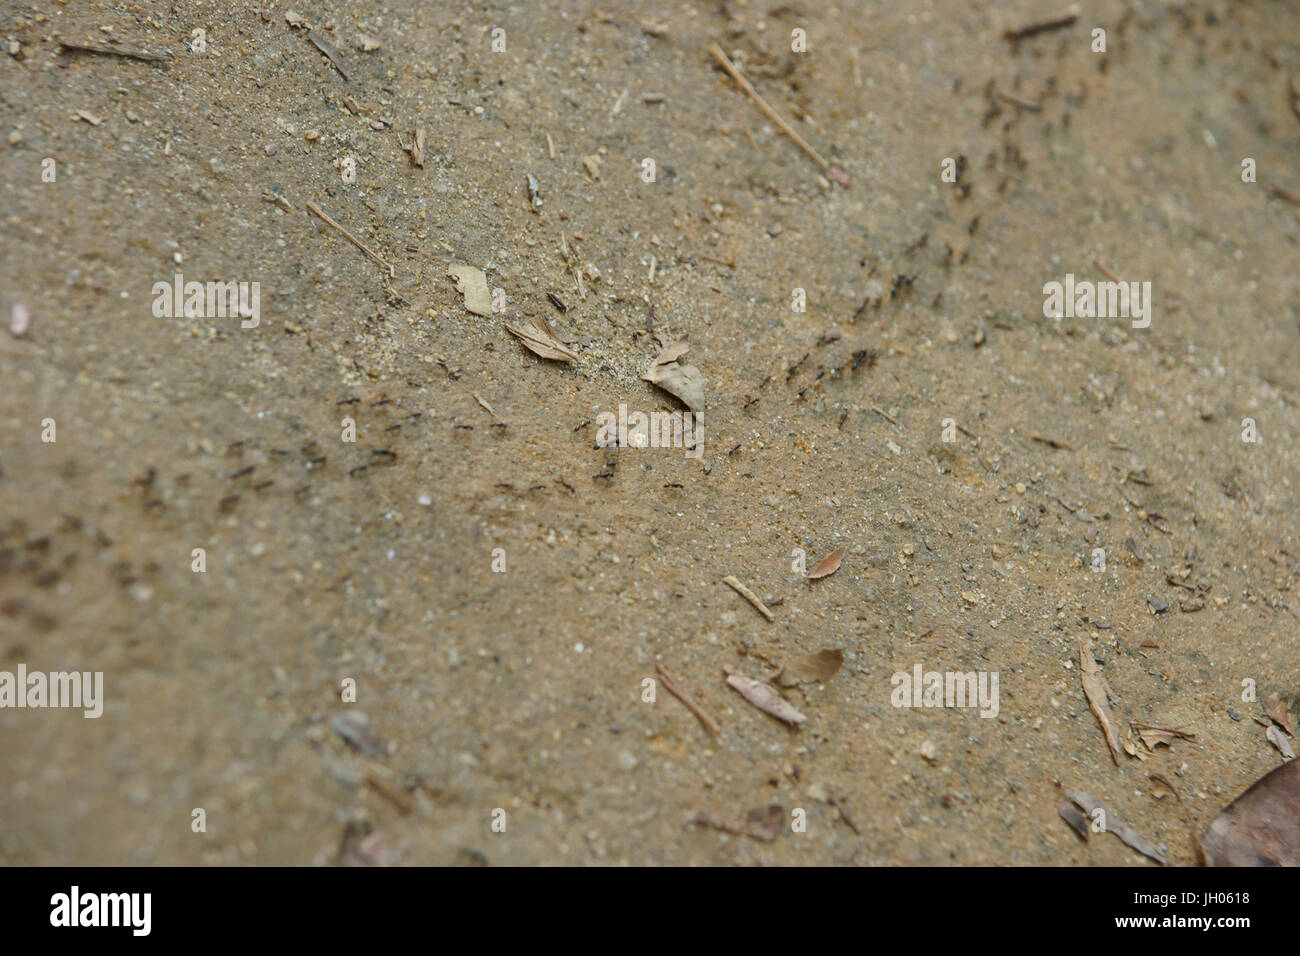 Ants, Sand, Ilha Grande, Rio de Janeiro, Brazil Stock Photo - Alamy